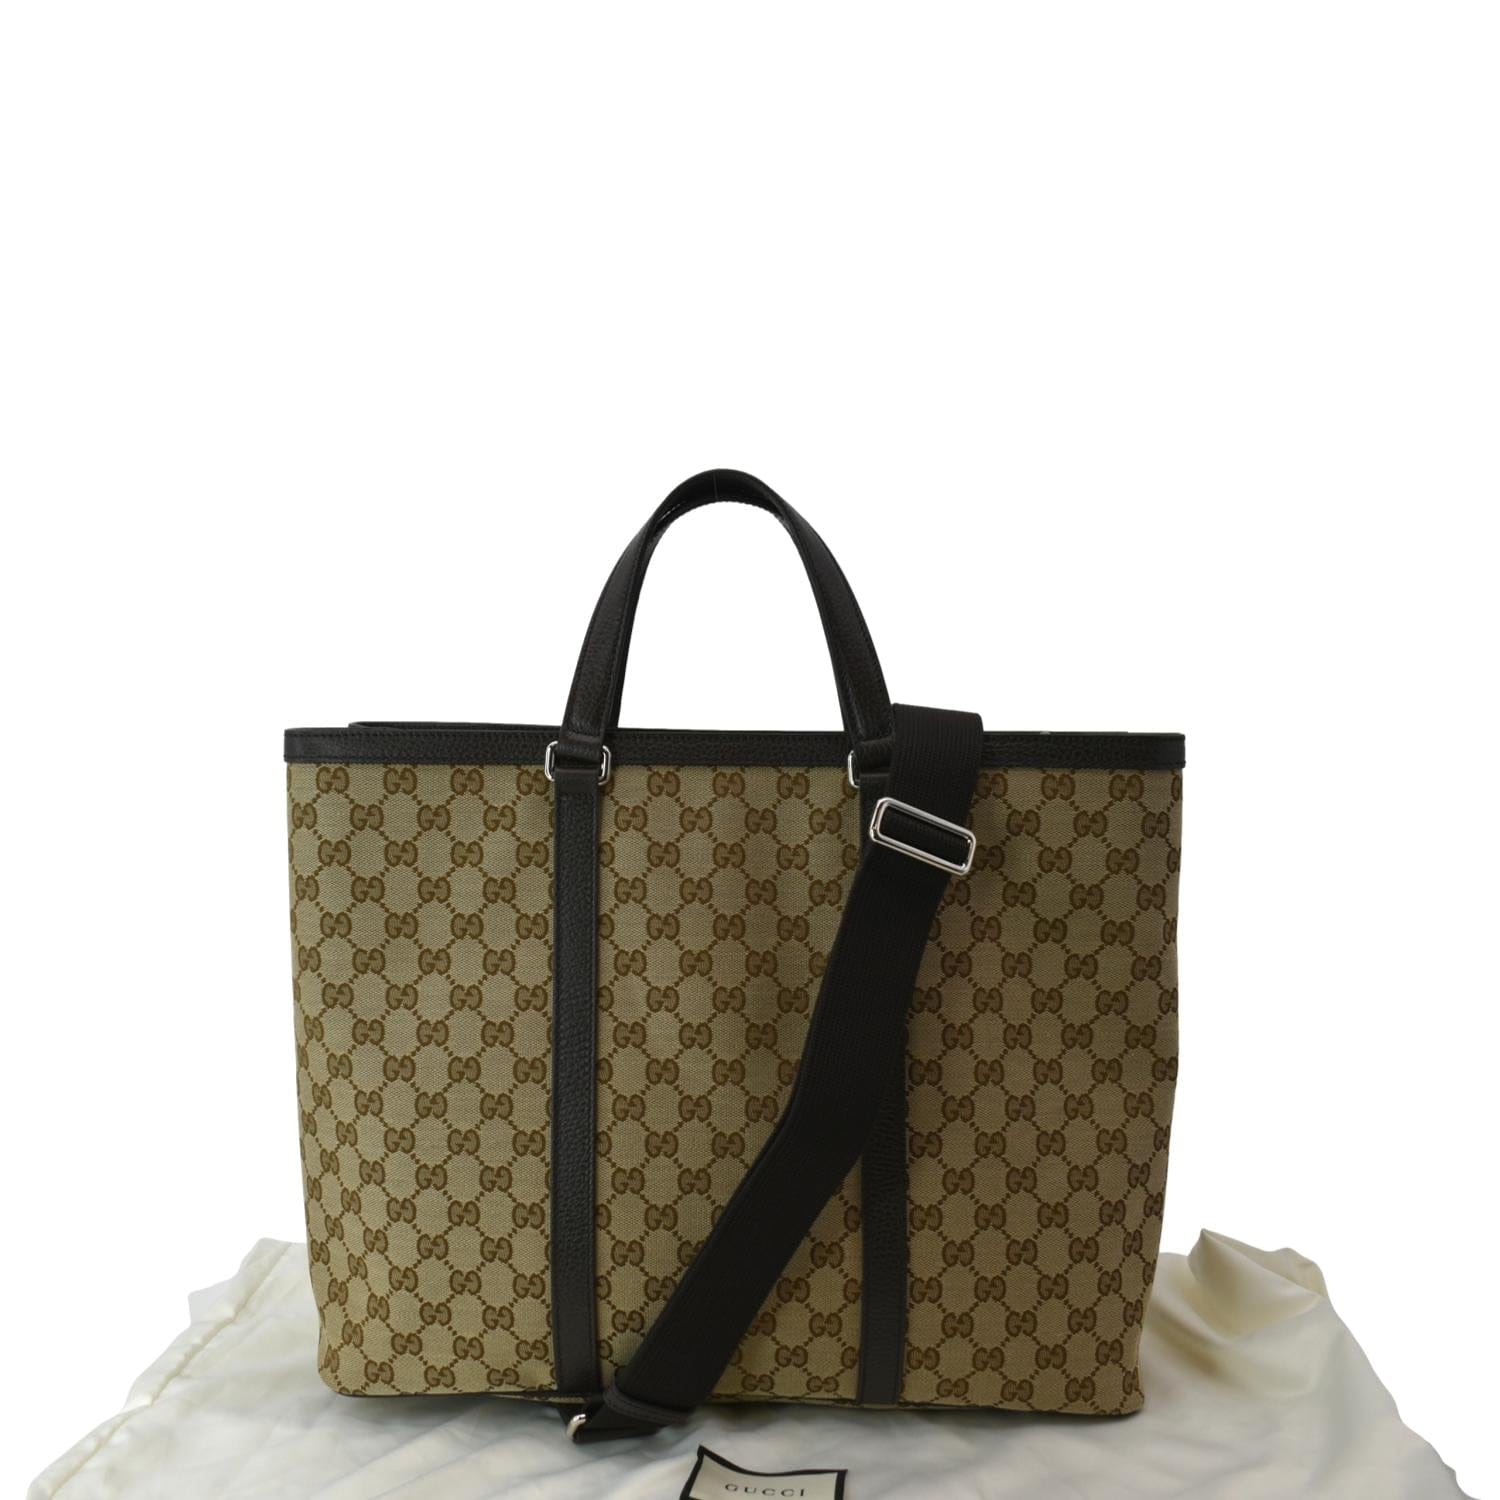 Gucci Gg Supreme Tote Bag Beigeebonycuir, $1,250, Neiman Marcus